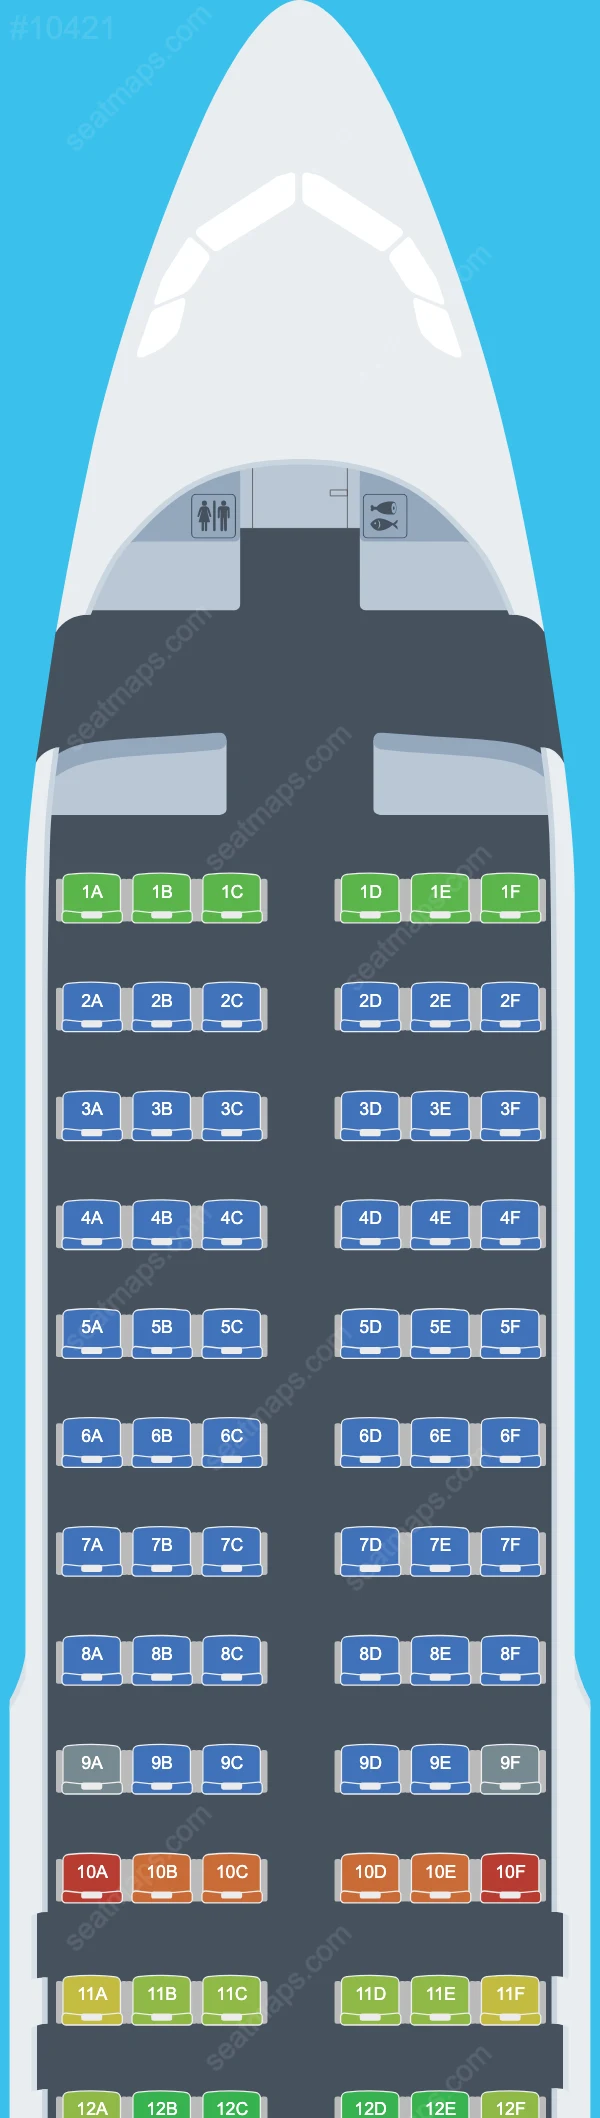 Uzbekistan Airways Airbus A320 Seat Maps A320-200 V.2